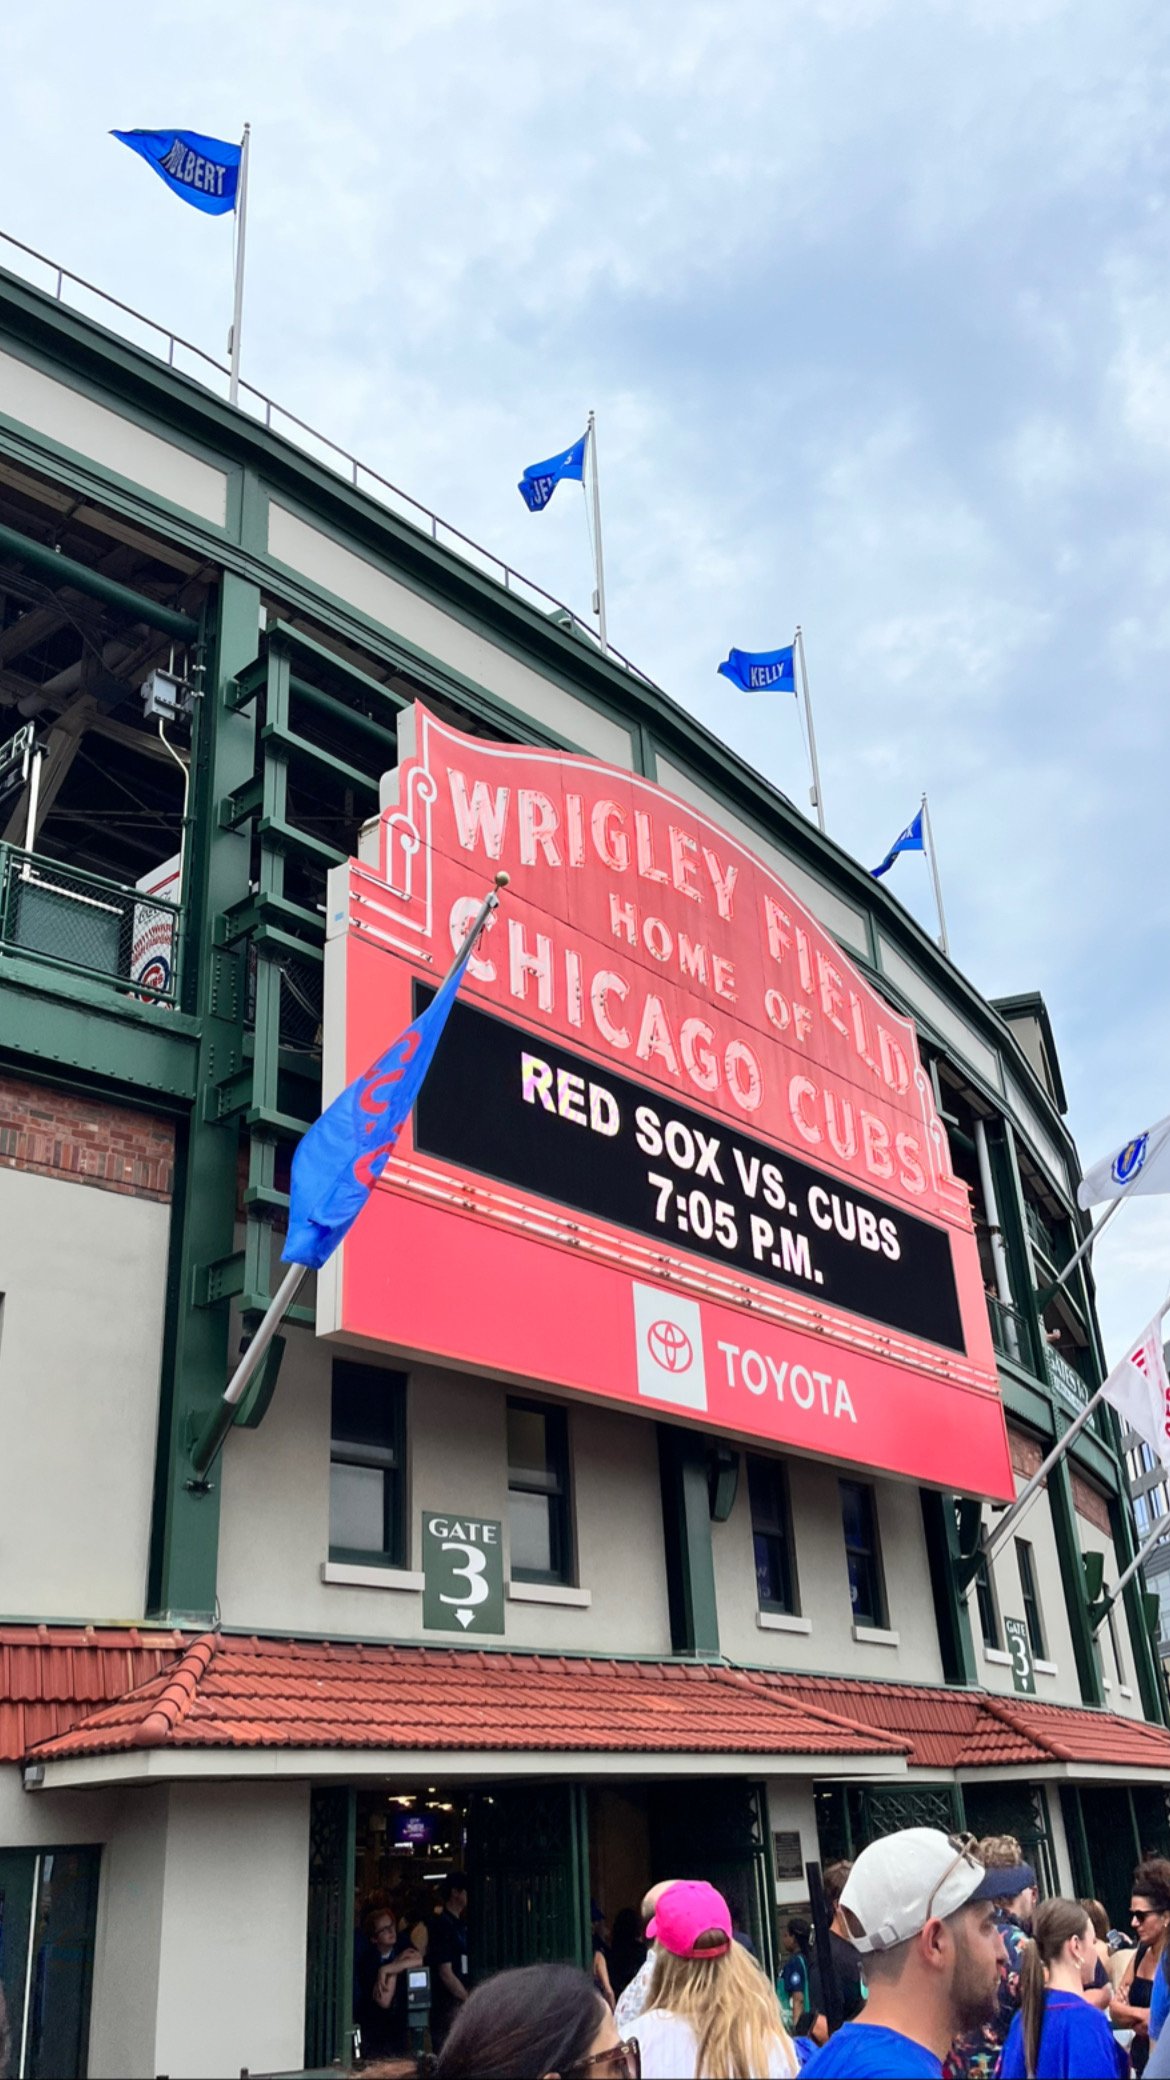 Wrigley Field Chicago Cubs vs Red Sox Illinois baseball.JPG